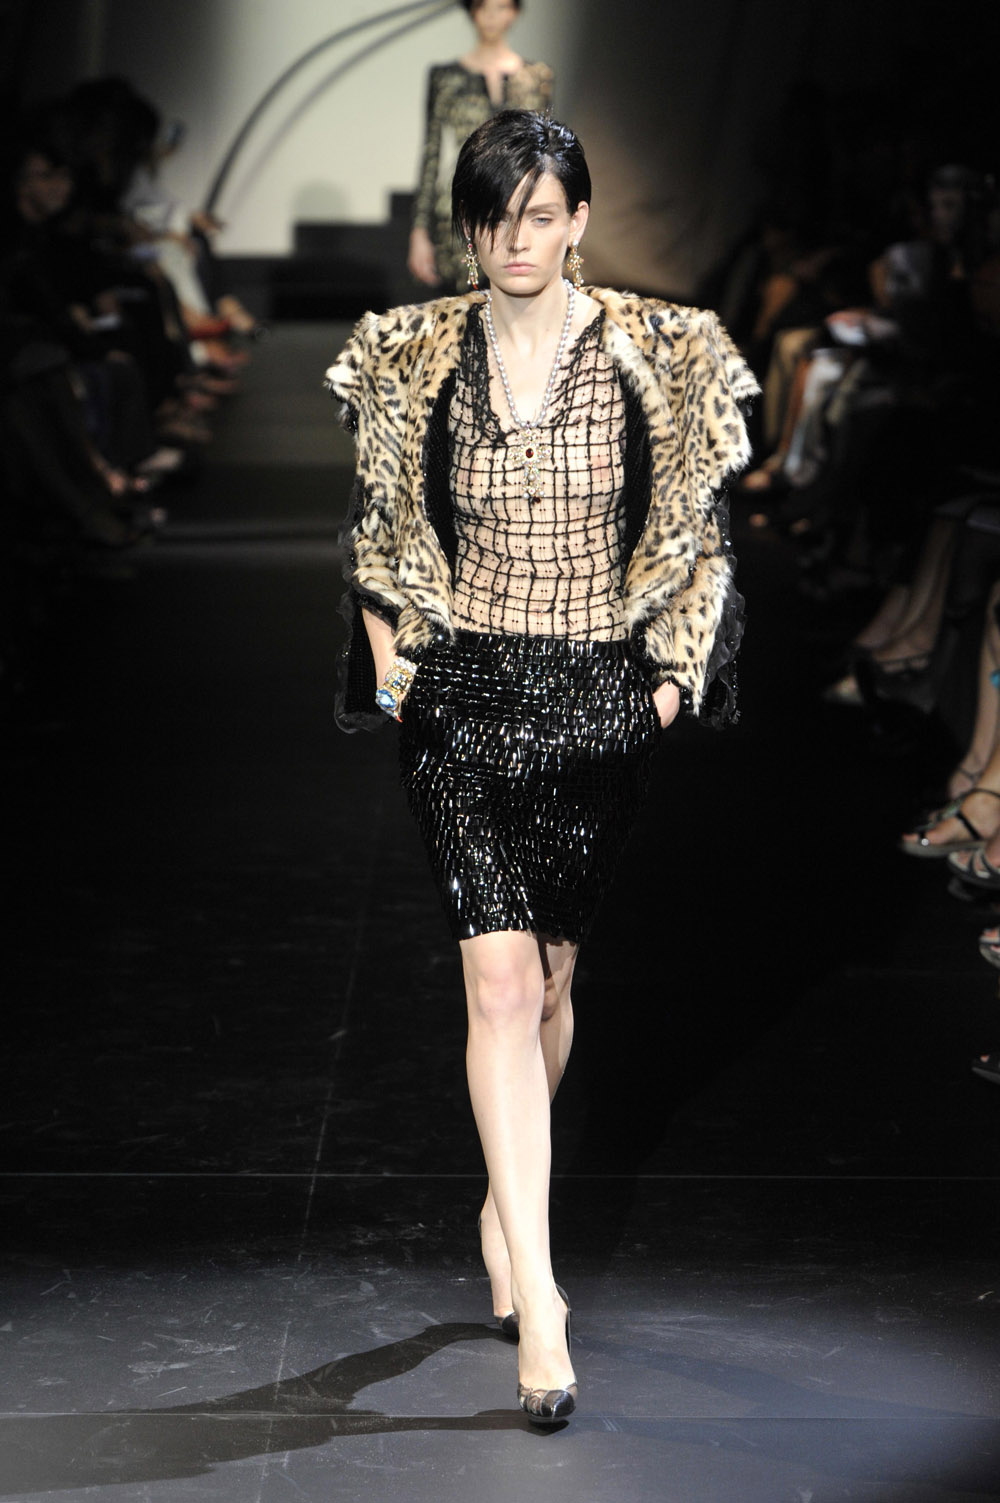 Giorgio Armani Prive Haute Couture Fall 2009: The Lady Wears the Pants ...